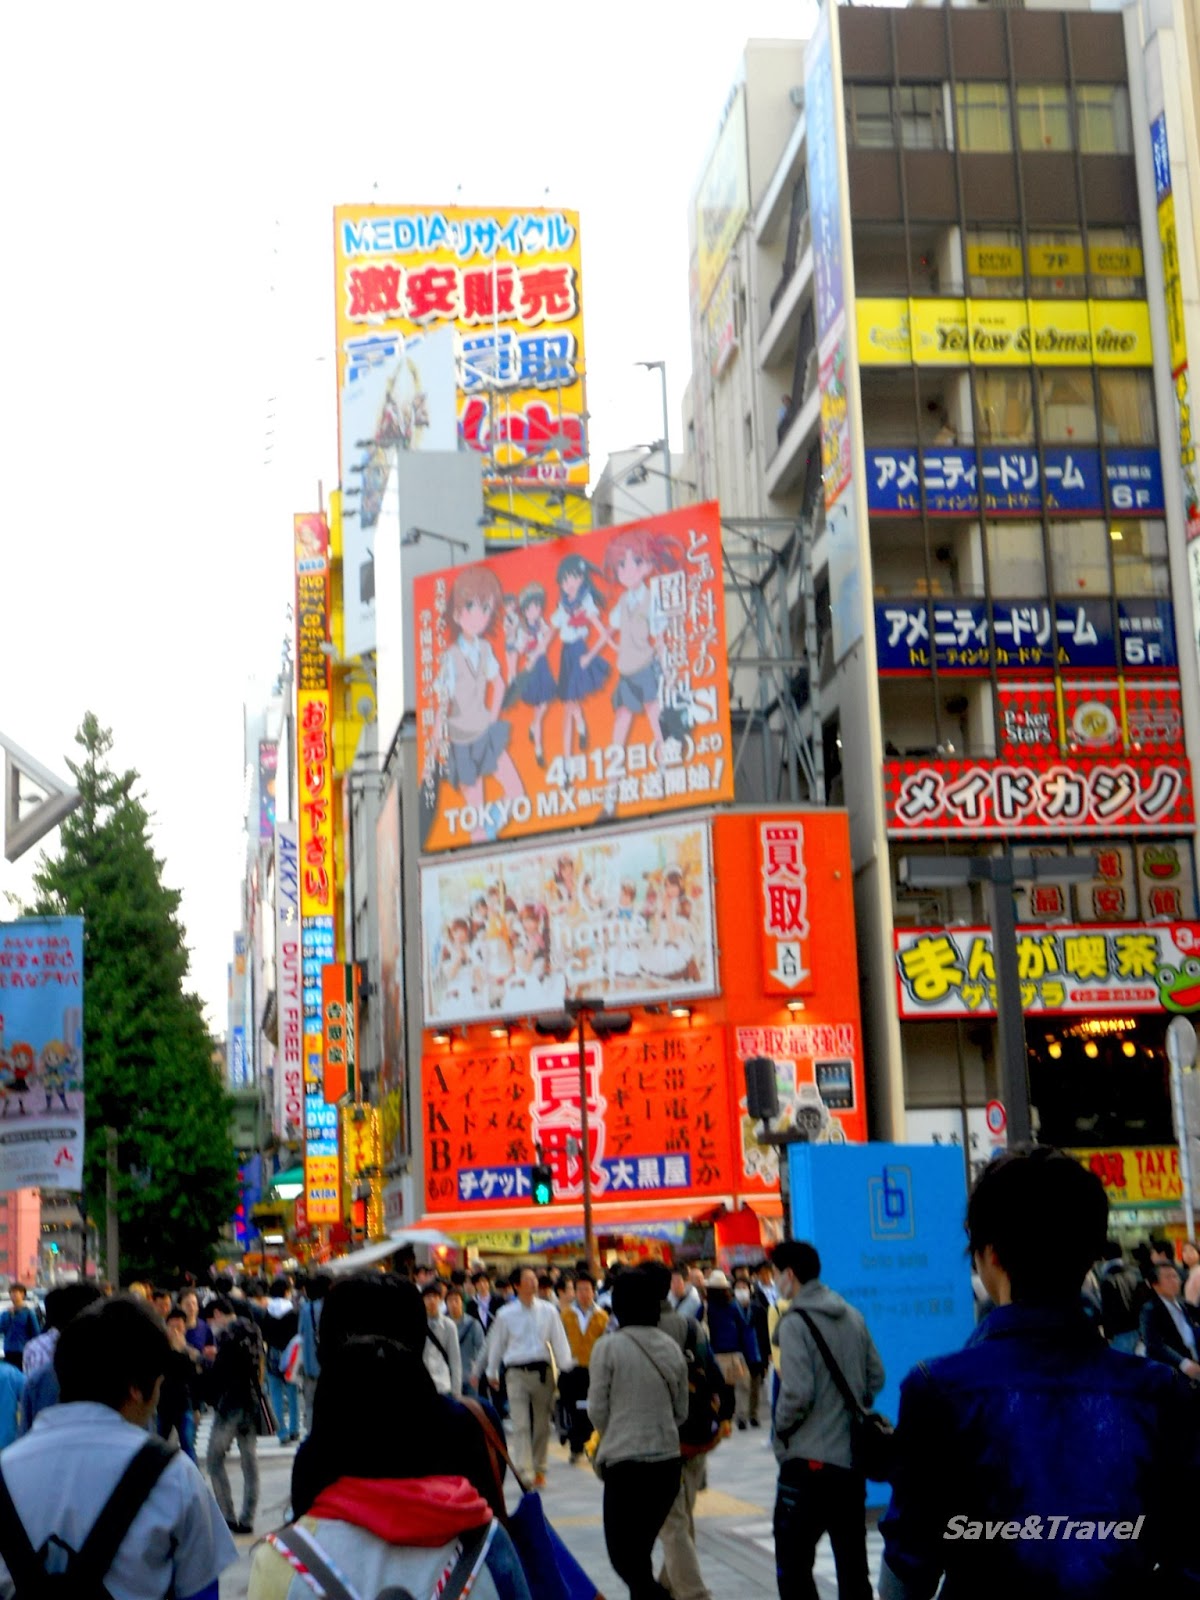 Save & Travel: Japan Golden Week - Tokyo